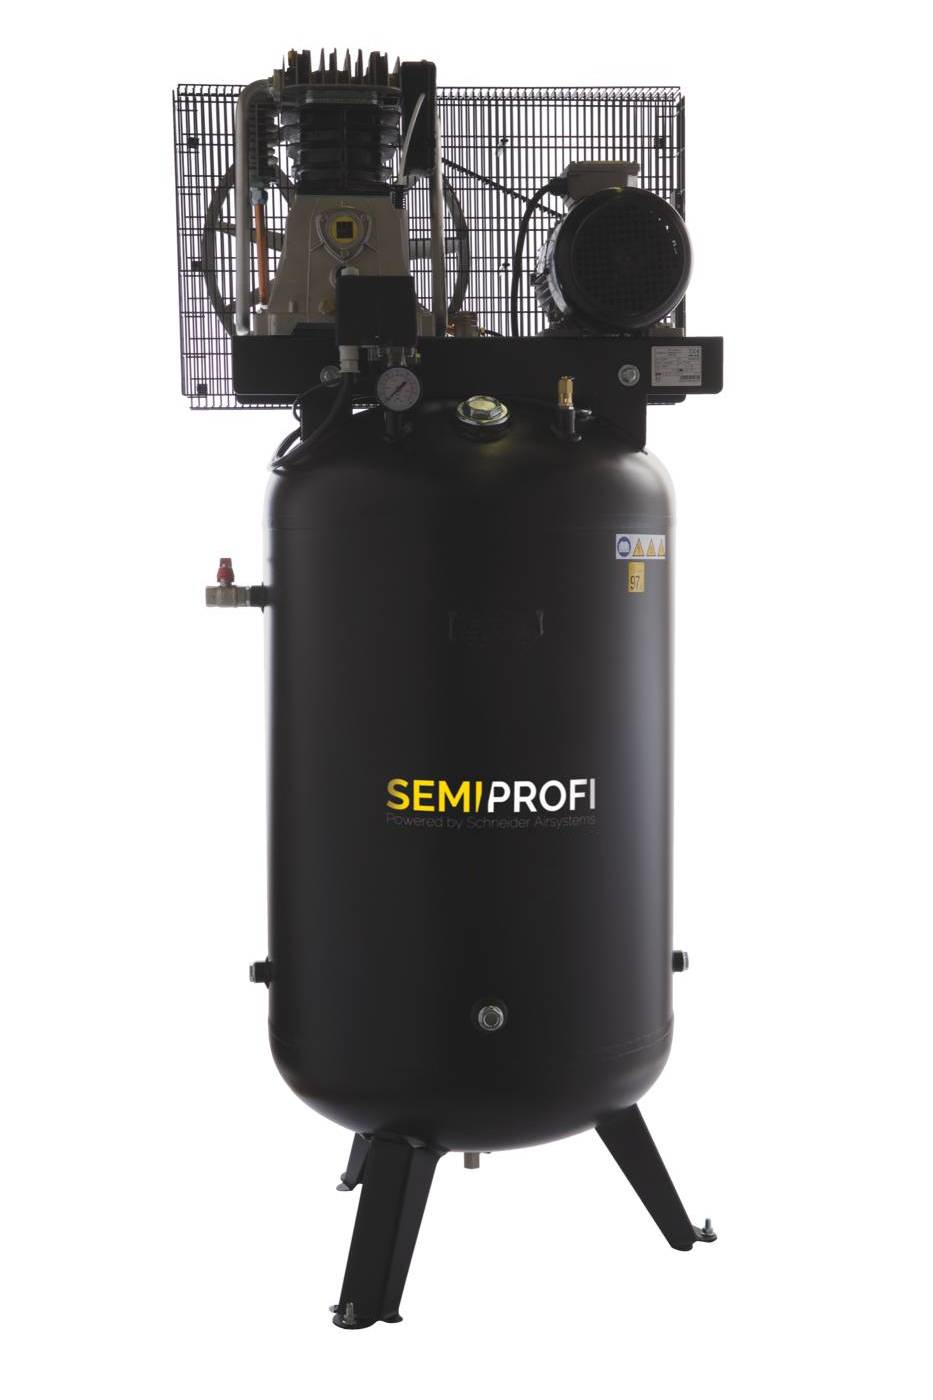 Schneider SEMI PROFI STS 650-10-270 D kompresor